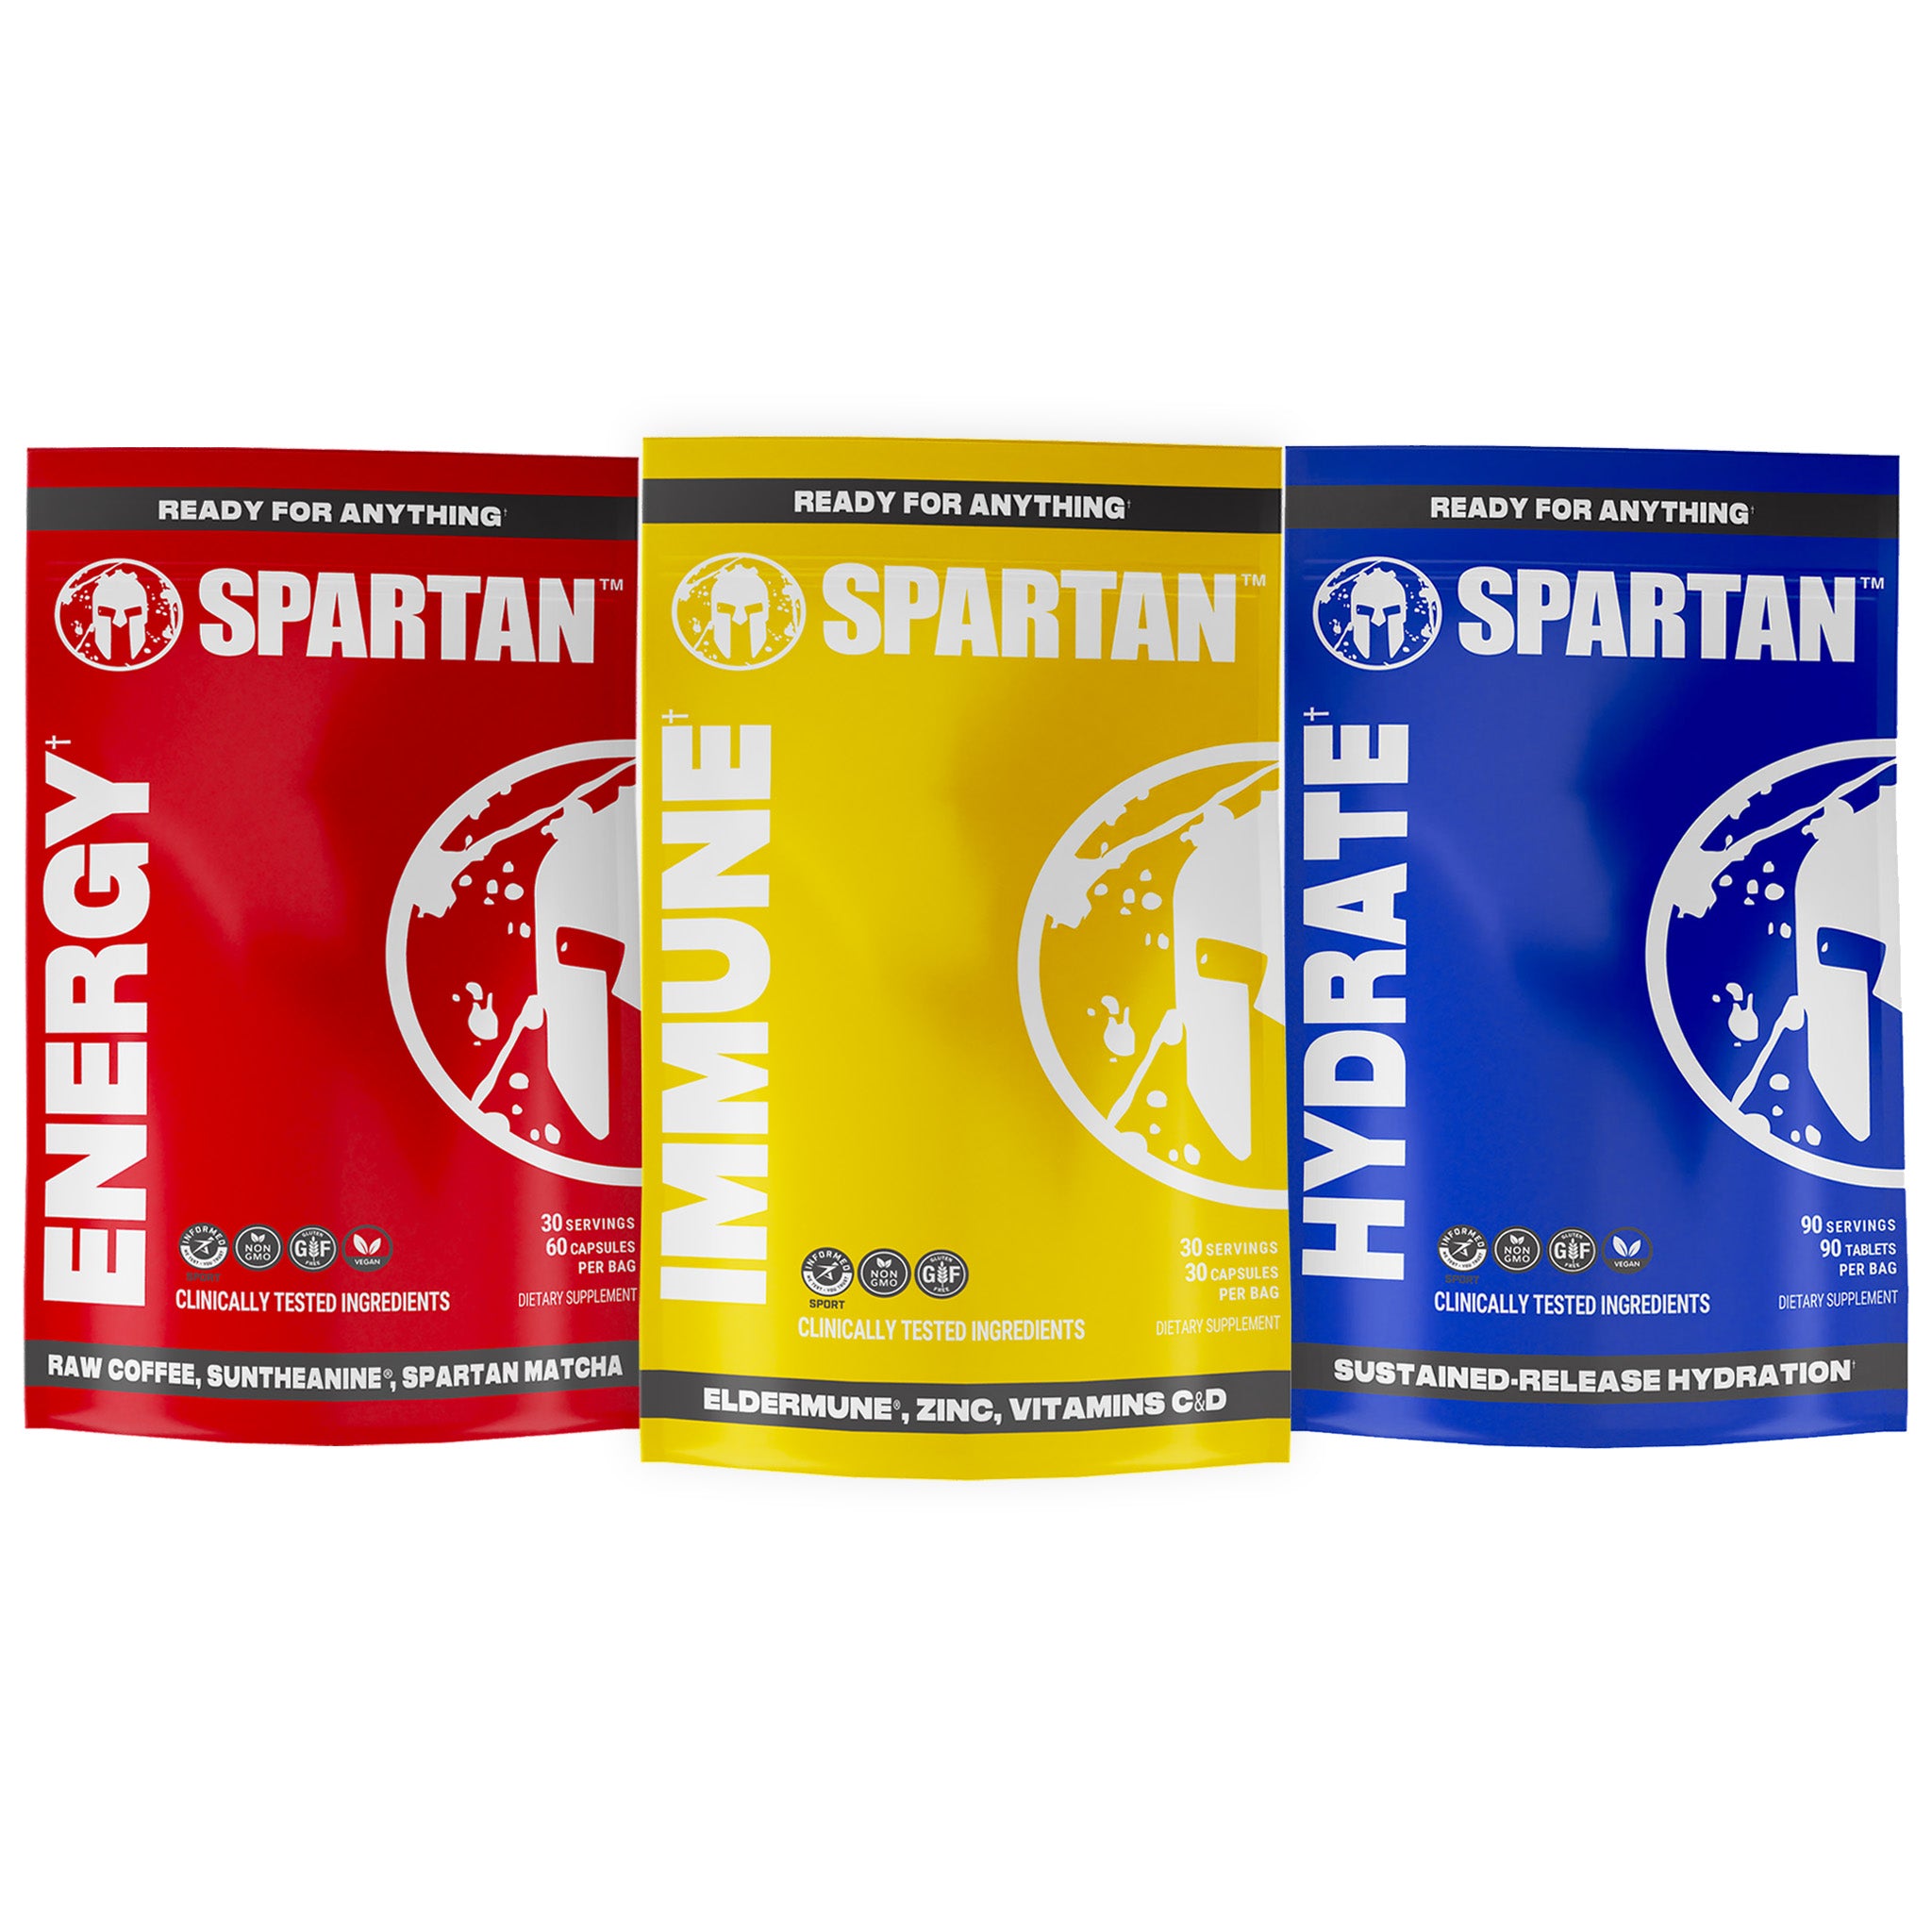 The Super - Spartan Energy, Spartan Immune, and Spartan Hydrate